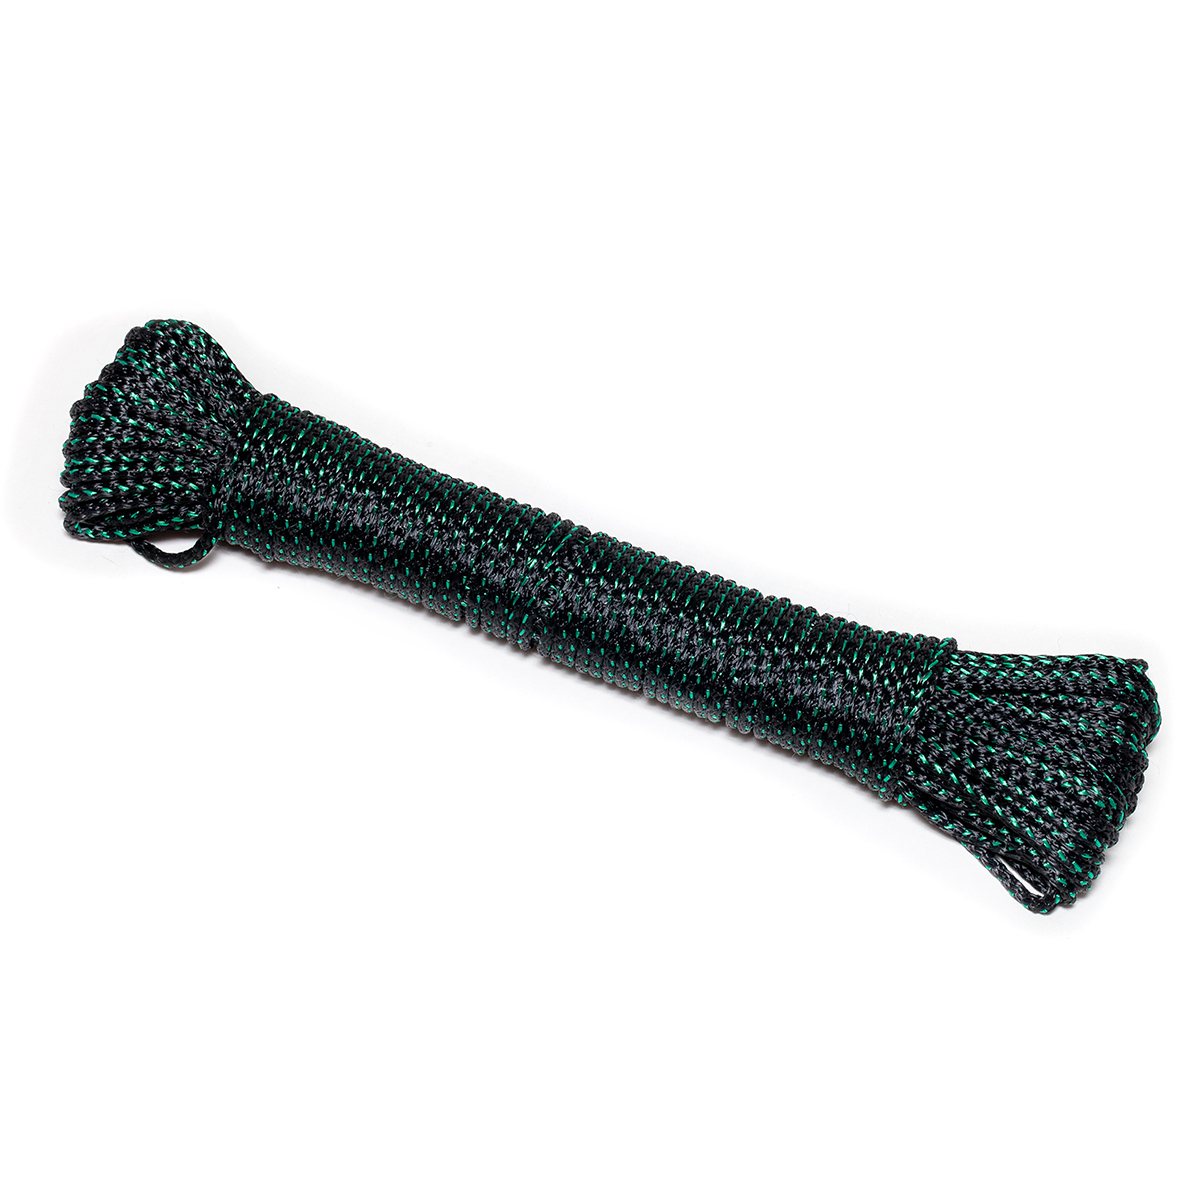 Шнур утяжеляющий Петроканат, 31 м, черно-зеленый, вес 14 г/м шнур для вязания 100% полиэфир ширина 4 мм 50м изумруд